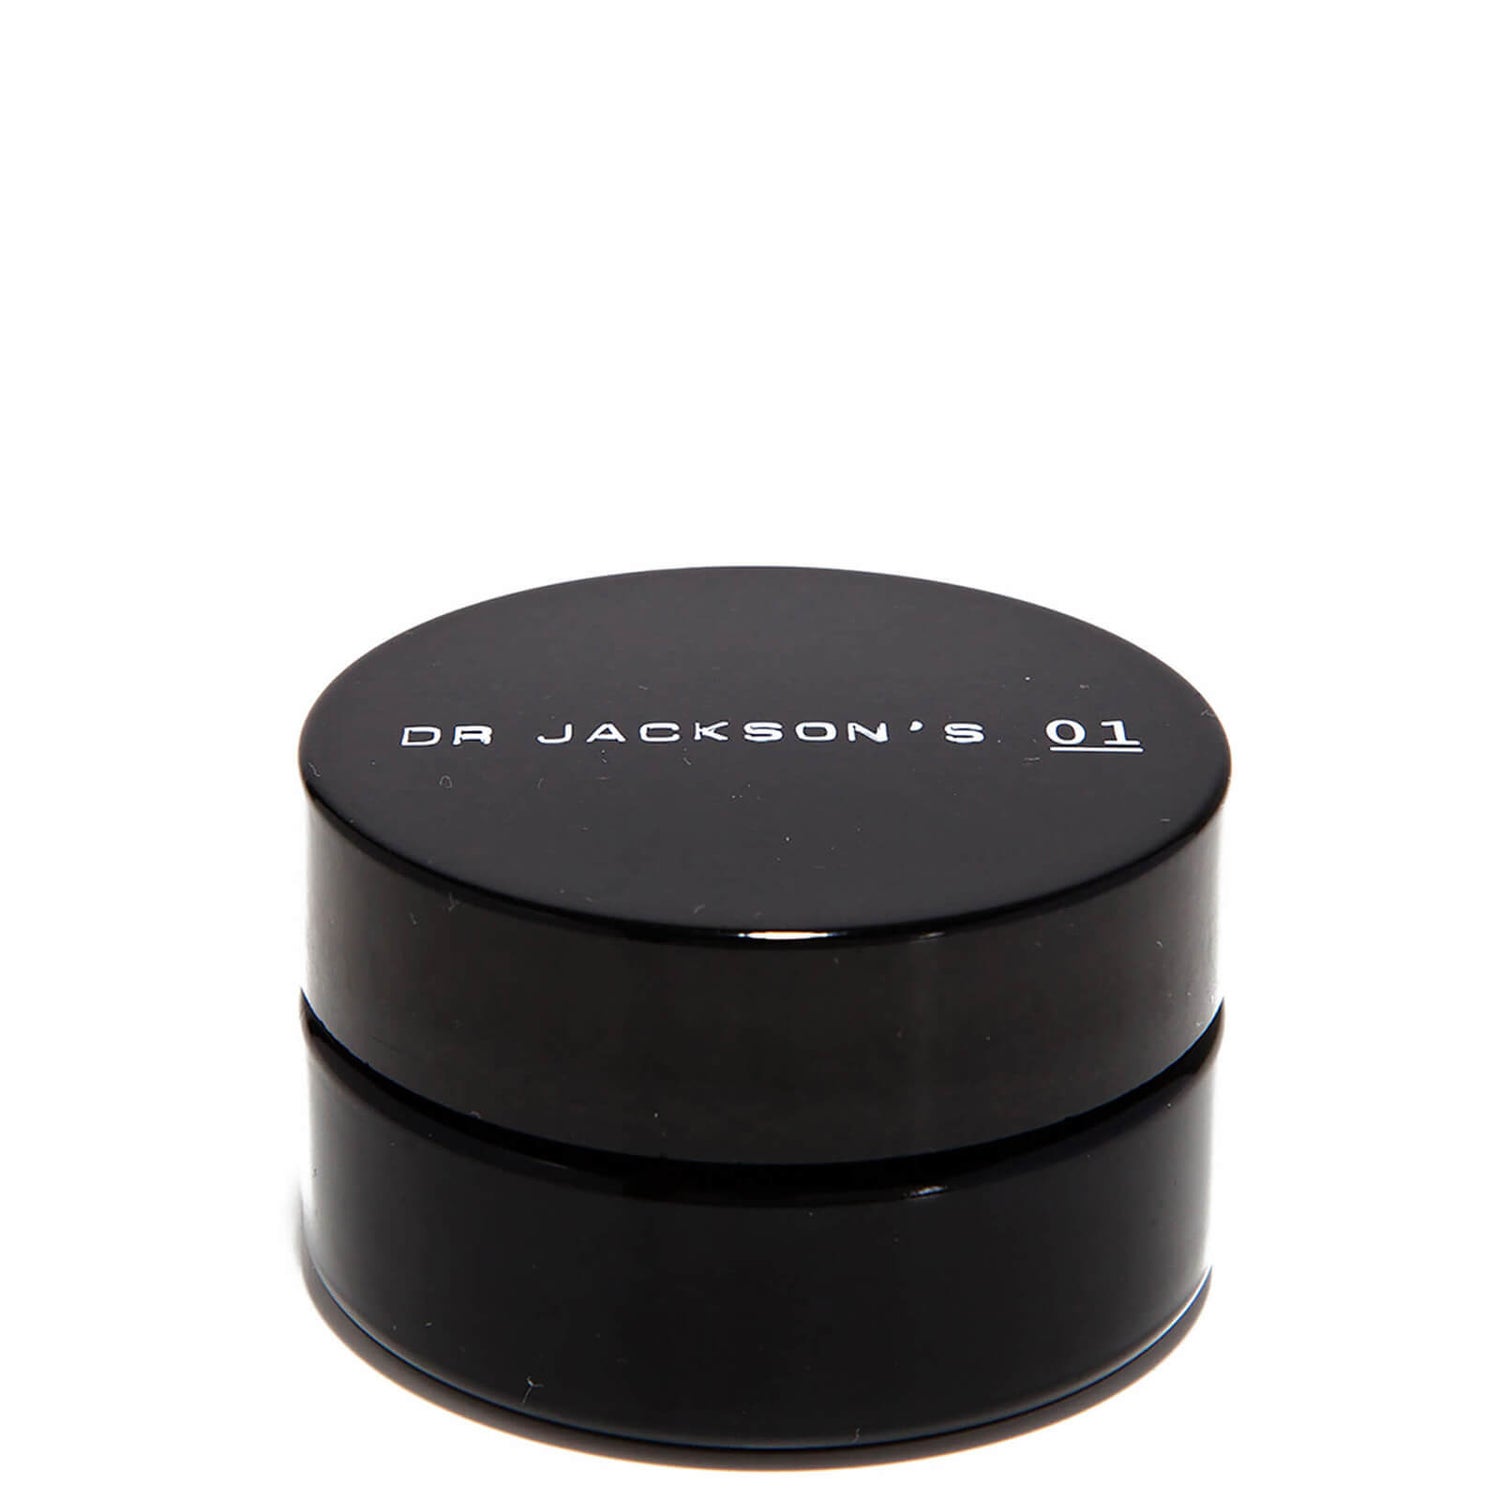 Crema facial Dr. Jackson's Natural Products 01 30 ml.